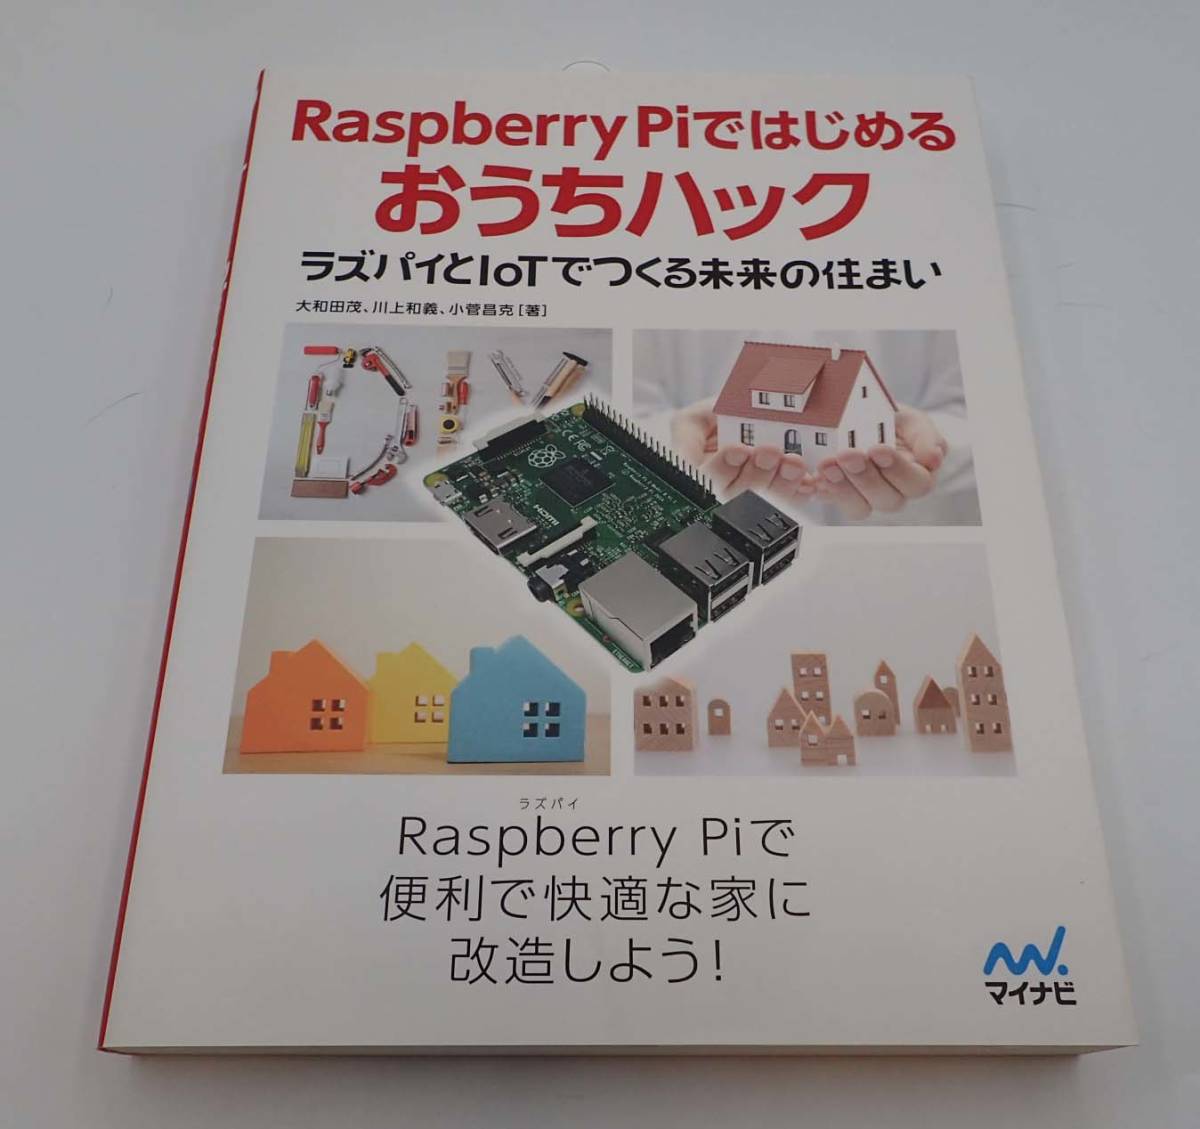 RaspberryPi. start .... is klaz pie IoT.... future. house 2,980 jpy + tax 